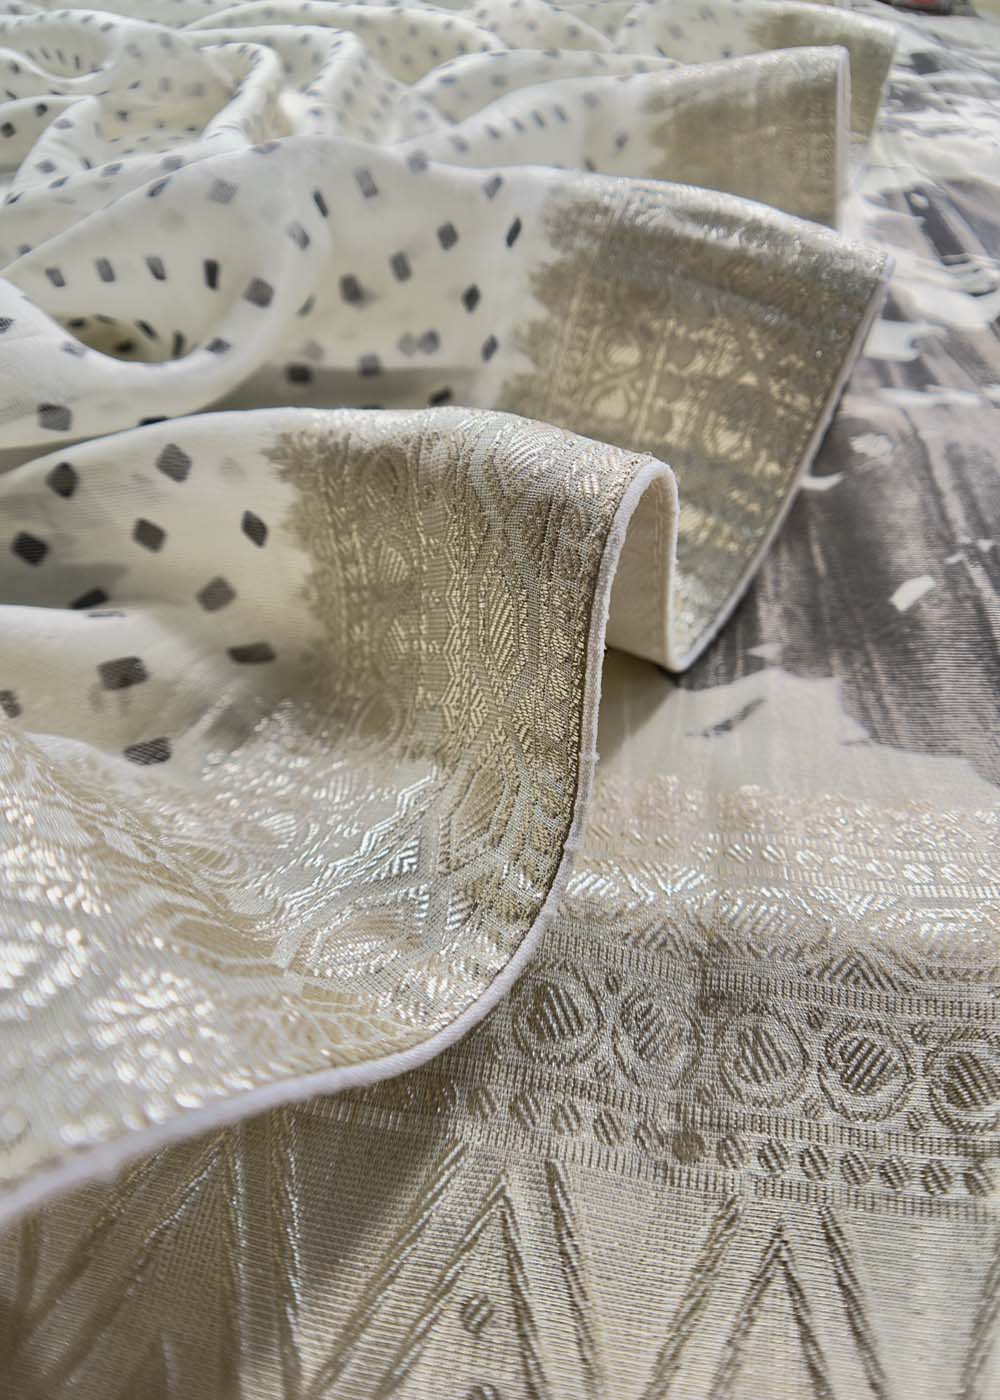 Mettalic Black And White Digital Print Tissue Silk Suit